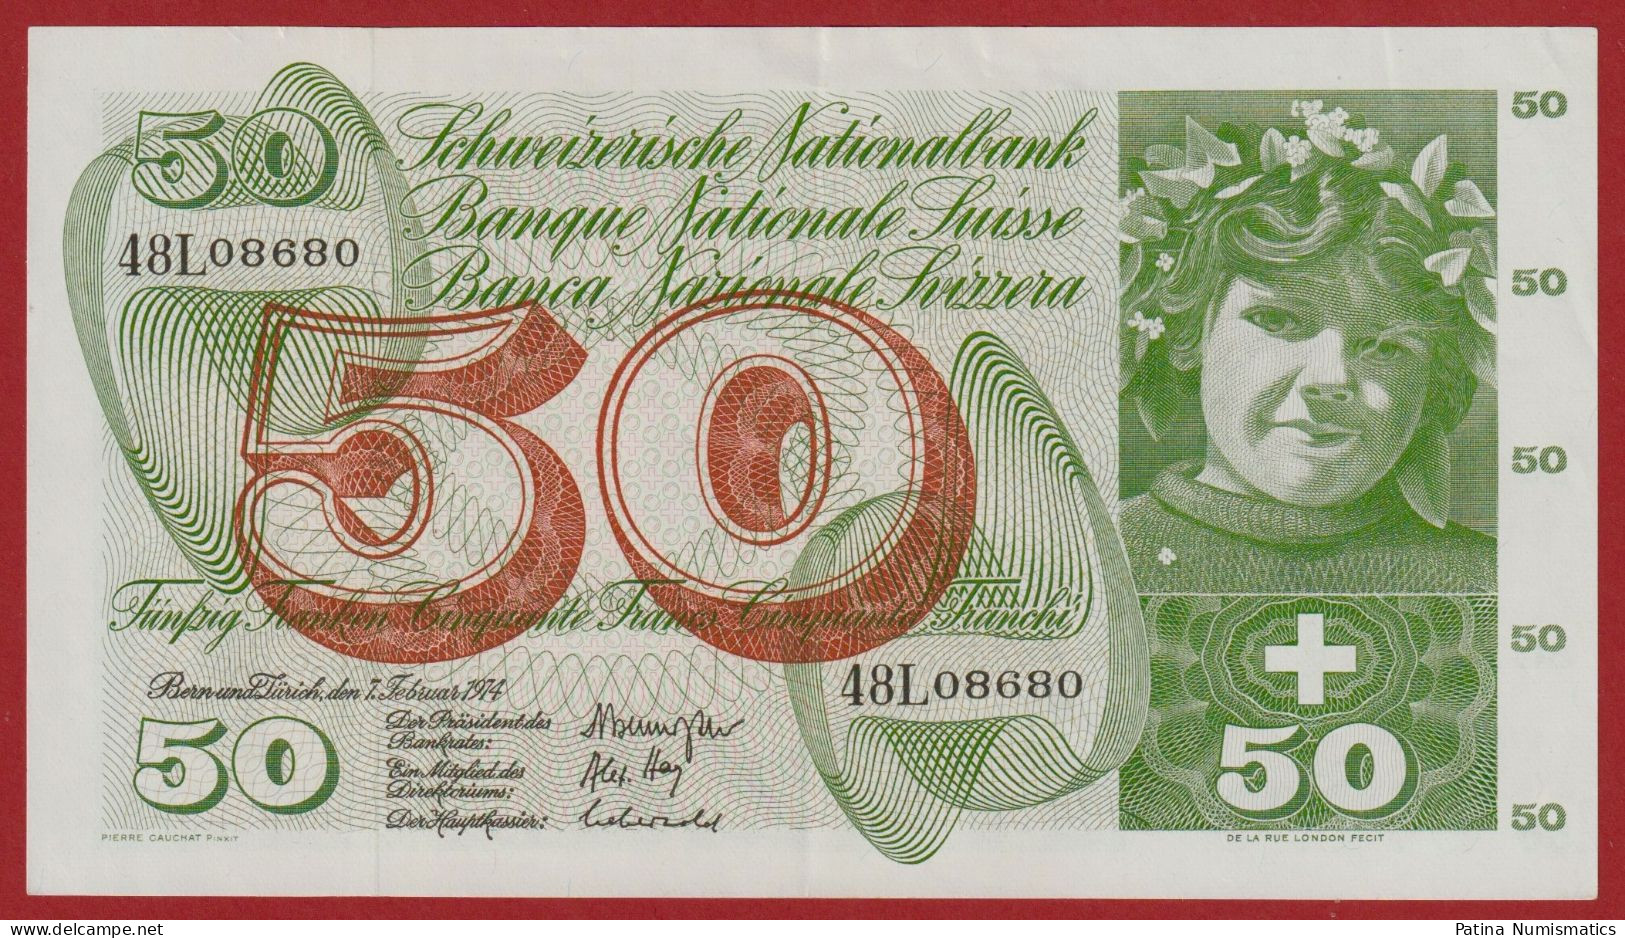 Switzerland 50 Francs 1974 P 48n Wonderful RADAR SN# 08680 Crisp EF ++ - Switzerland